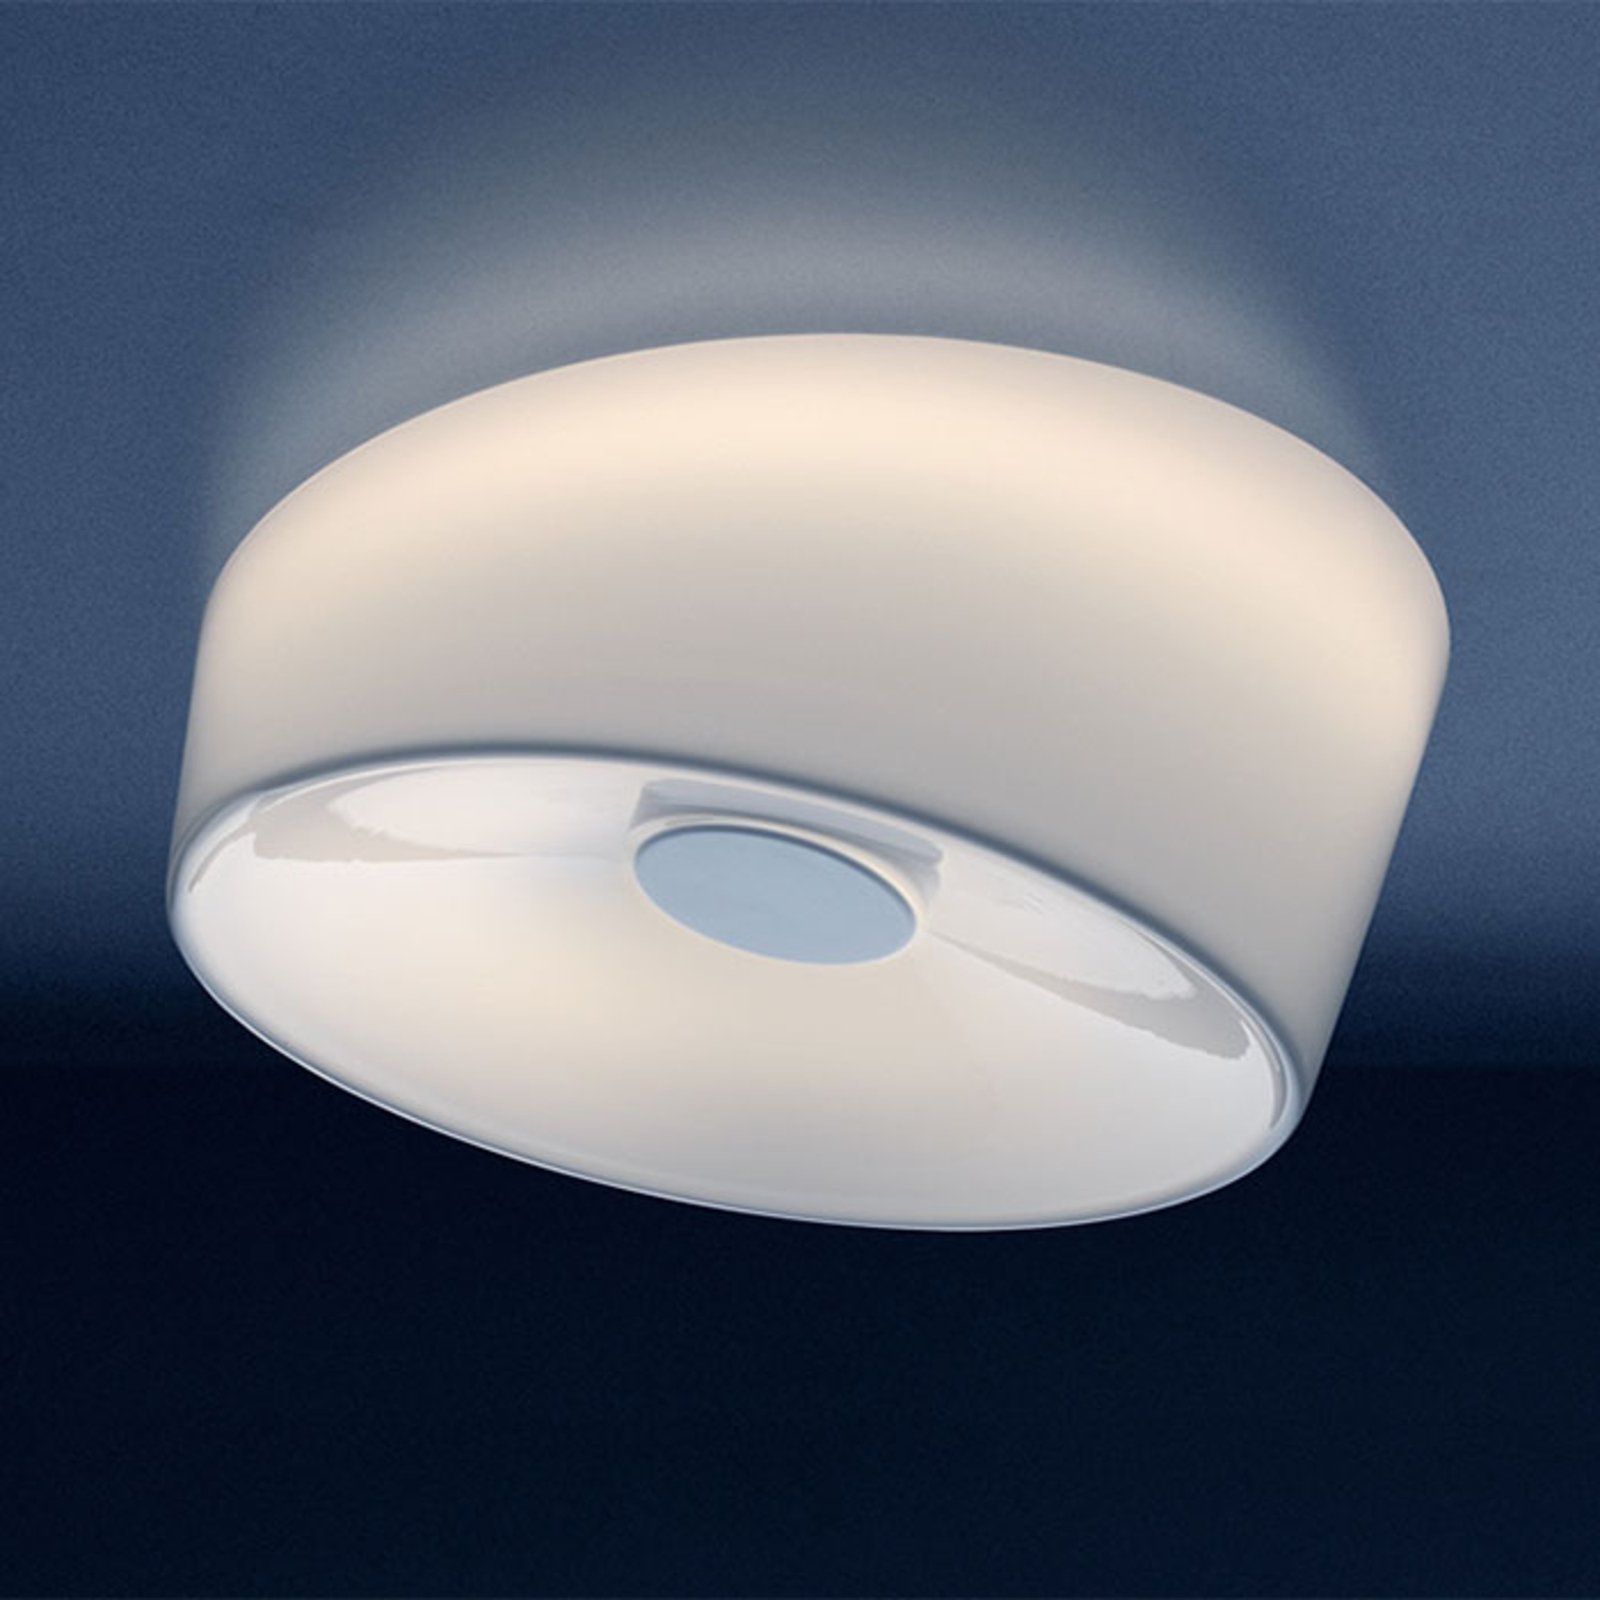 Foscarini Lumiere G9 plafondlamp, Ø 24 cm, wit